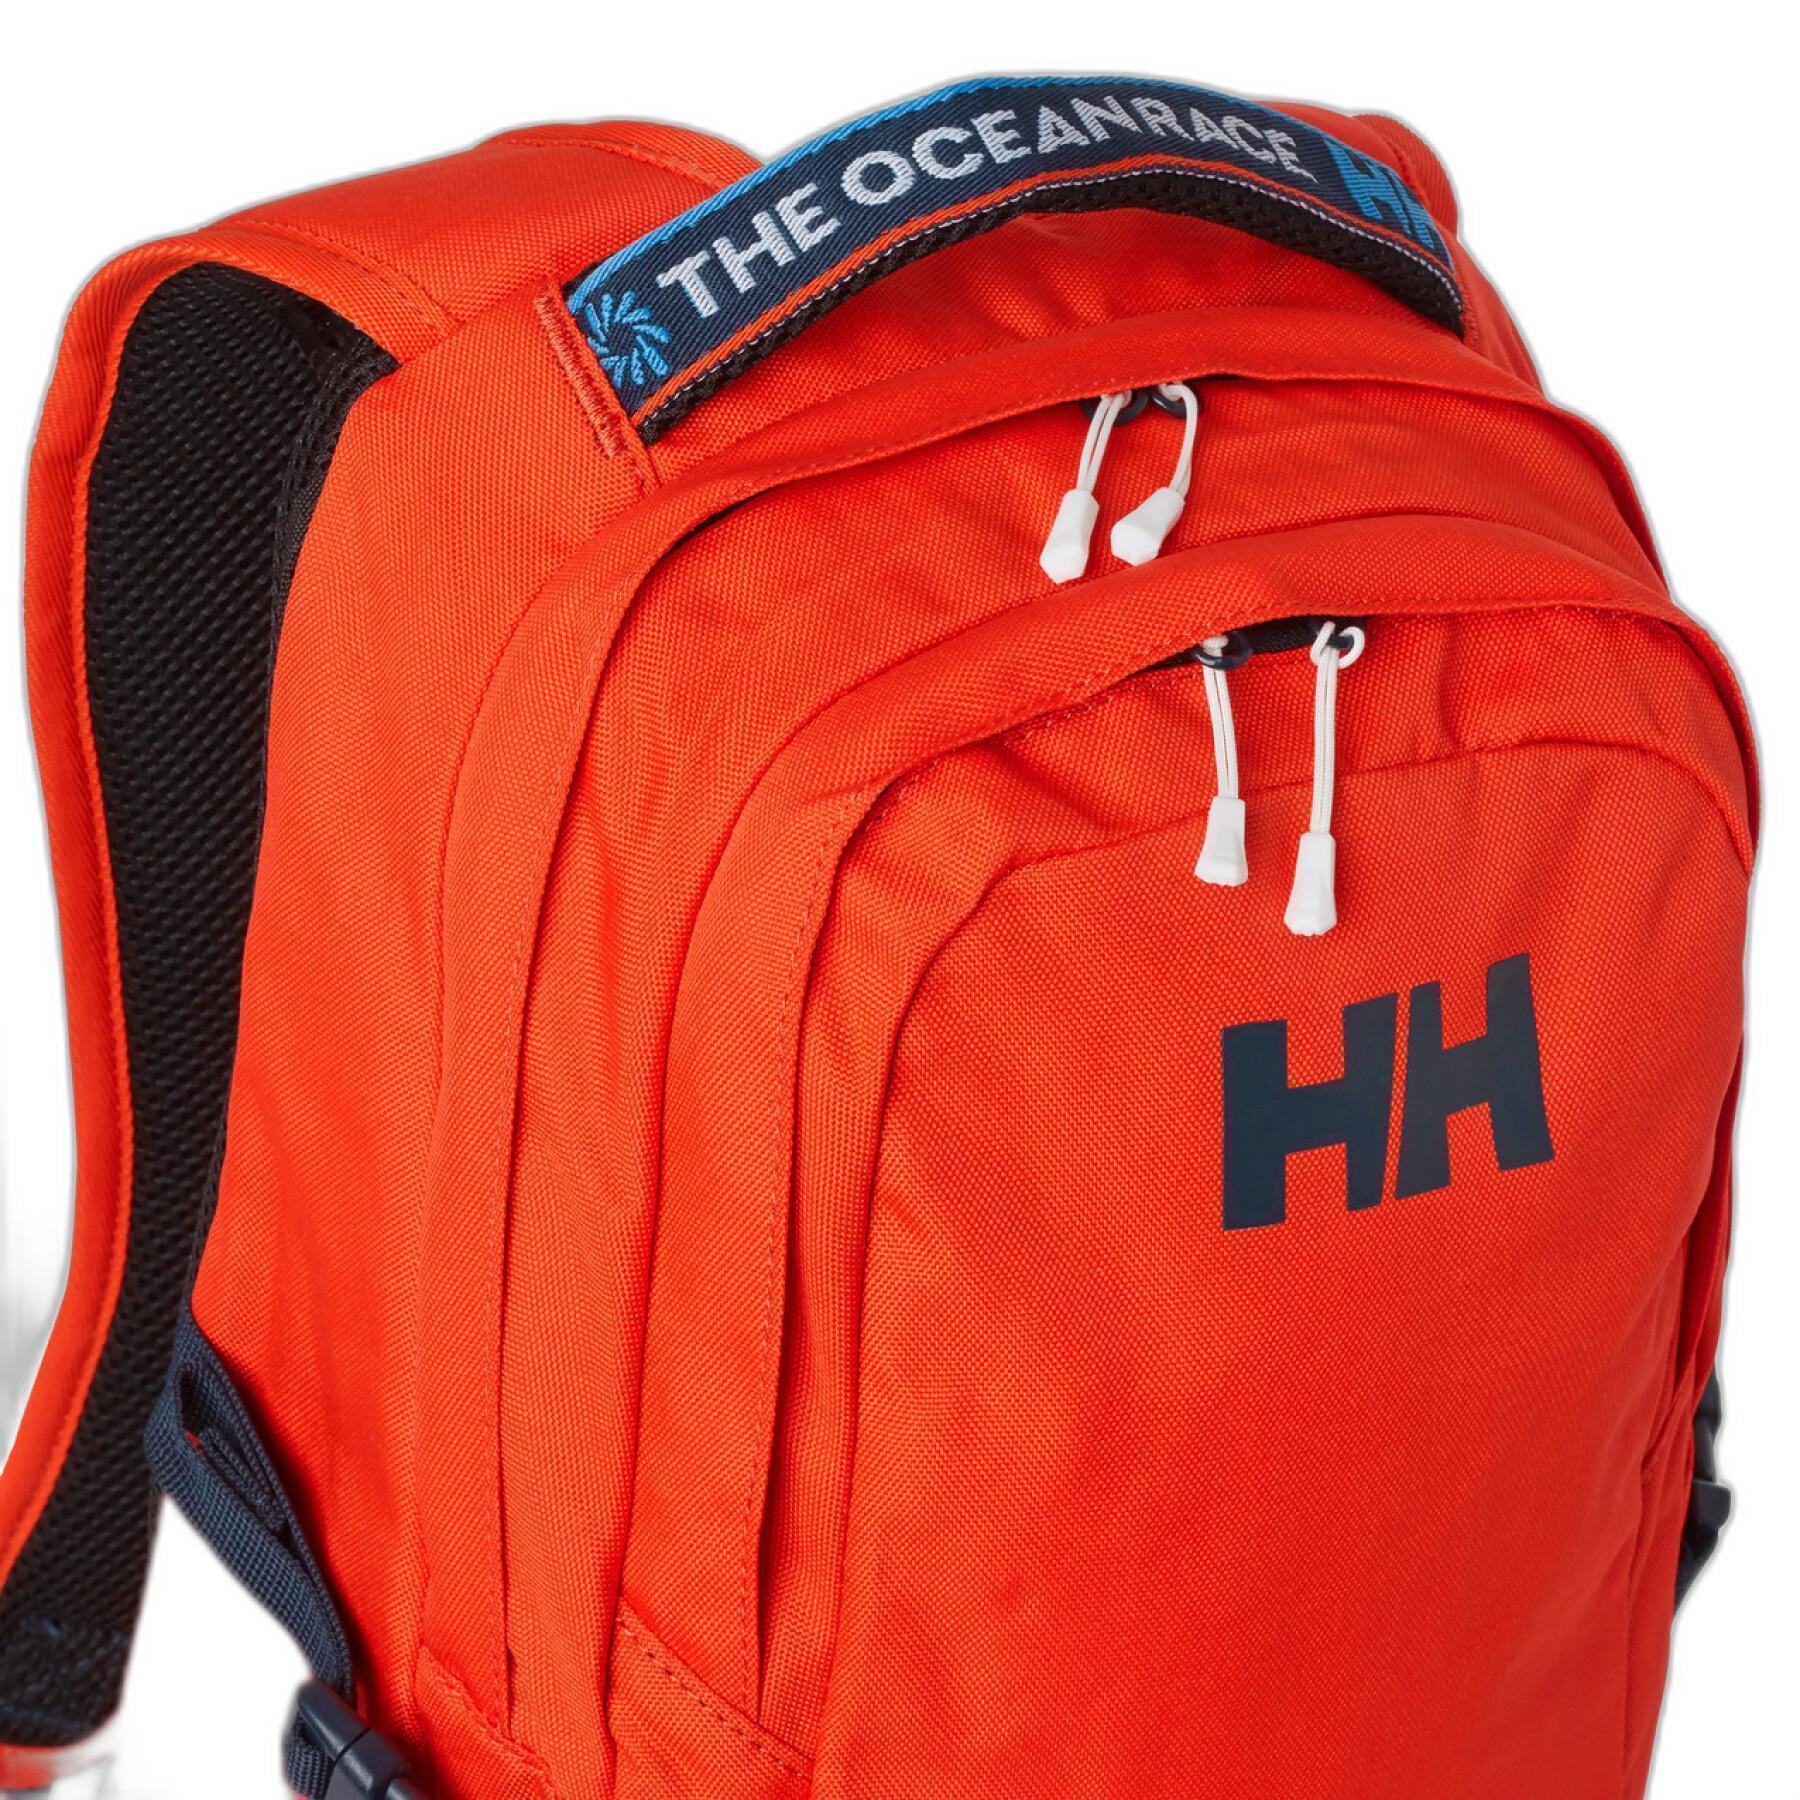 Backpack Helly Hansen the ocean race